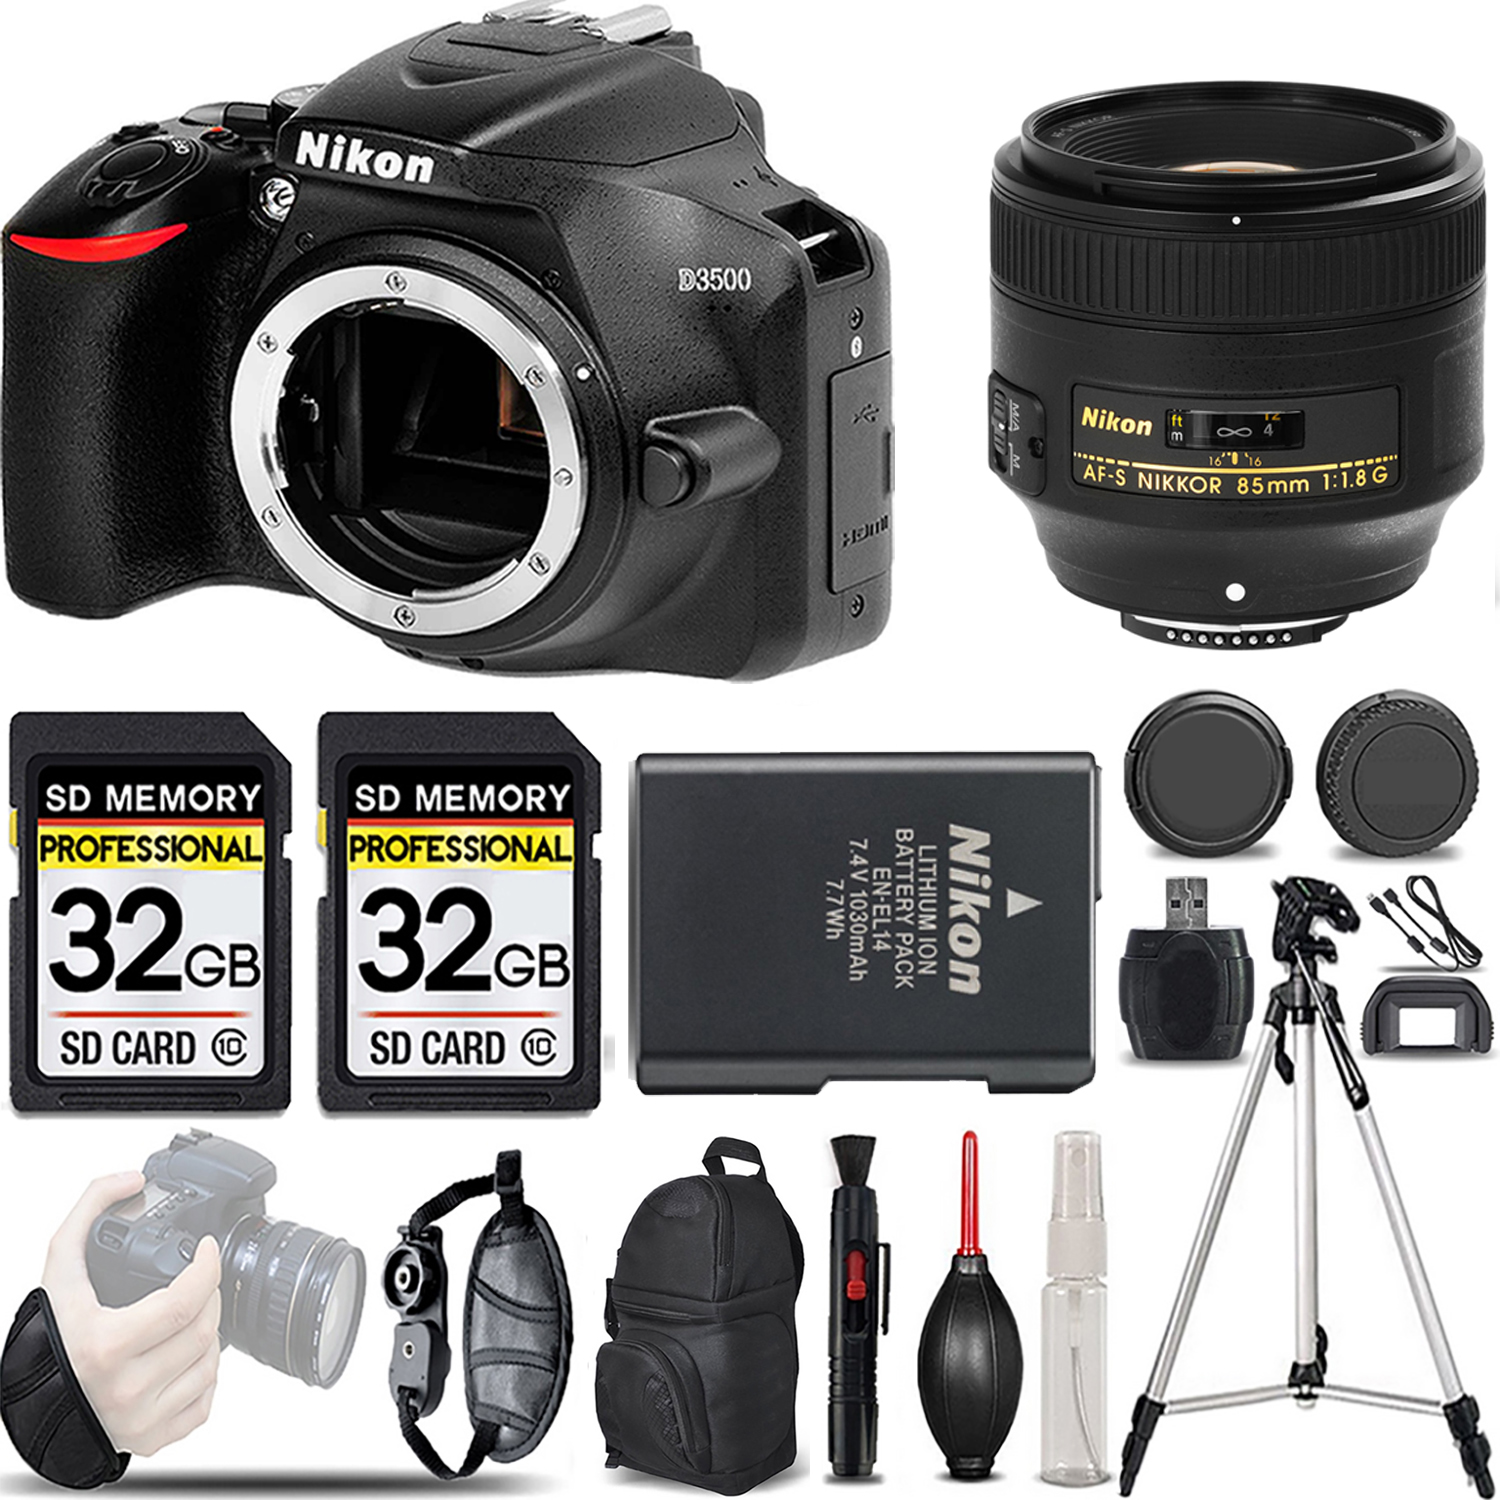 D3500 DSLR Camera (Body Only) + 85mm f/1.8G Lens - LOADED KIT *FREE SHIPPING*